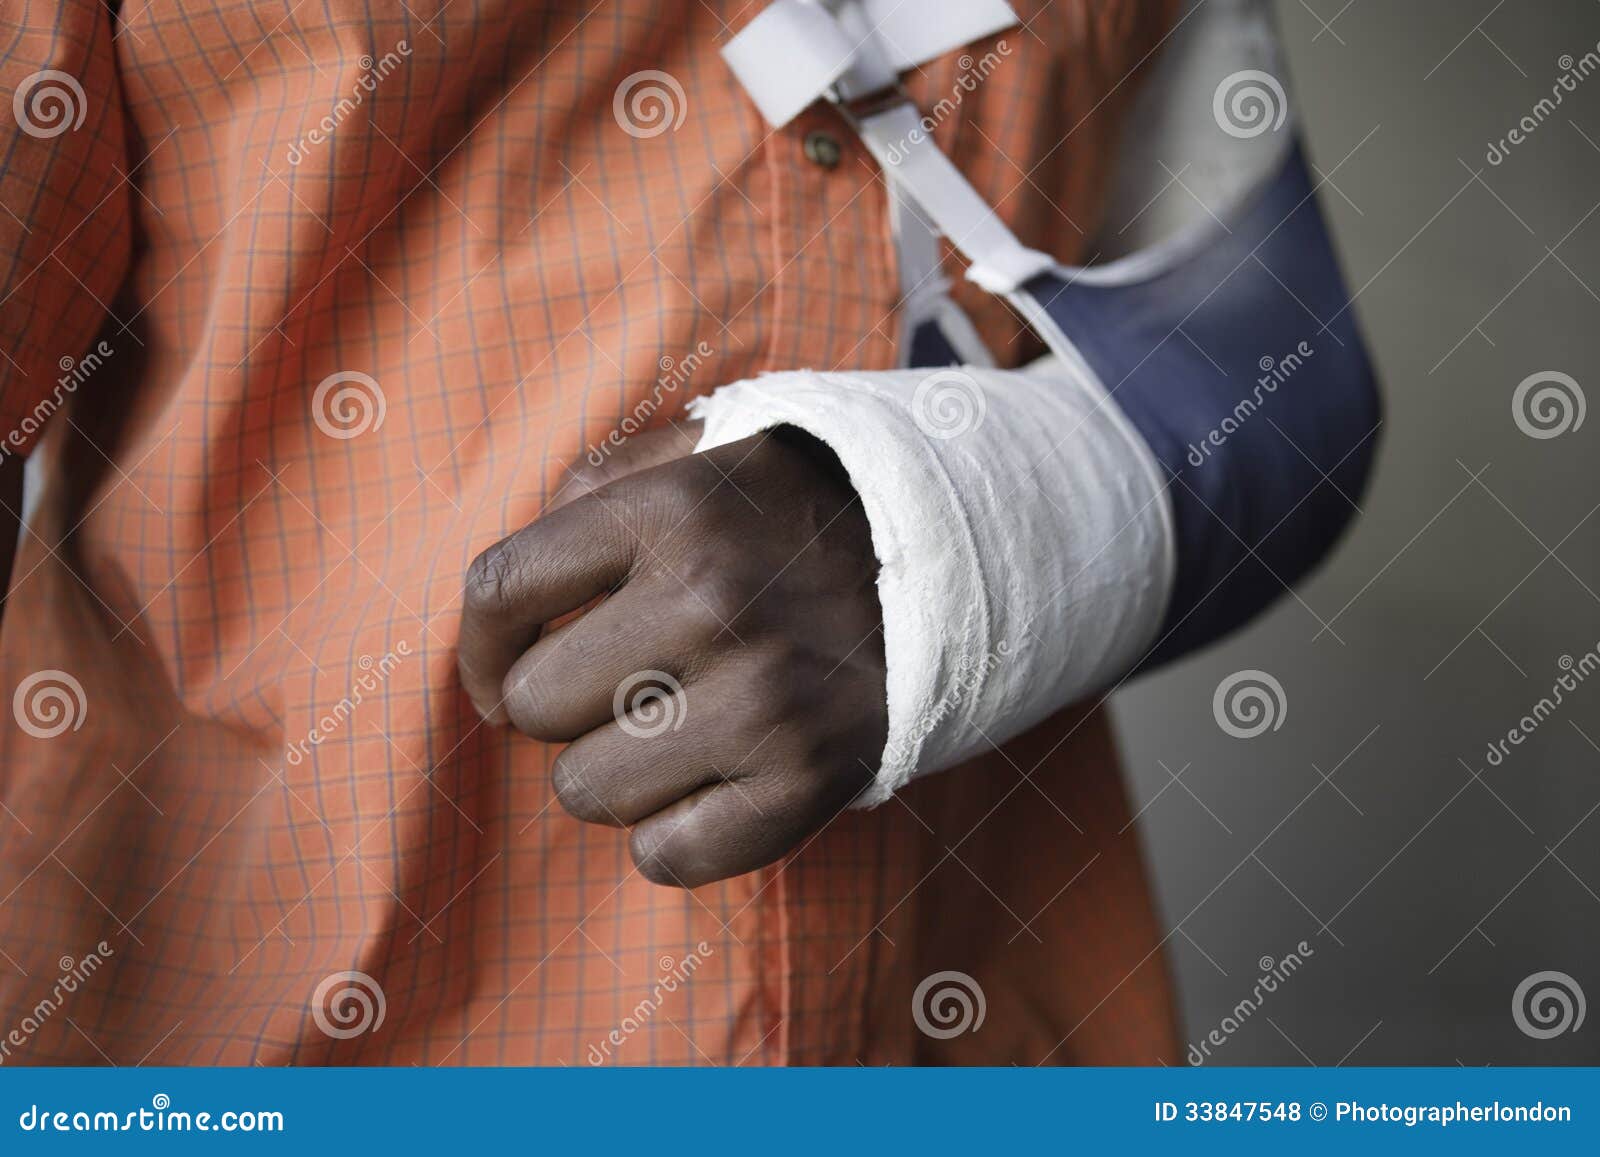 man with broken arm in cast